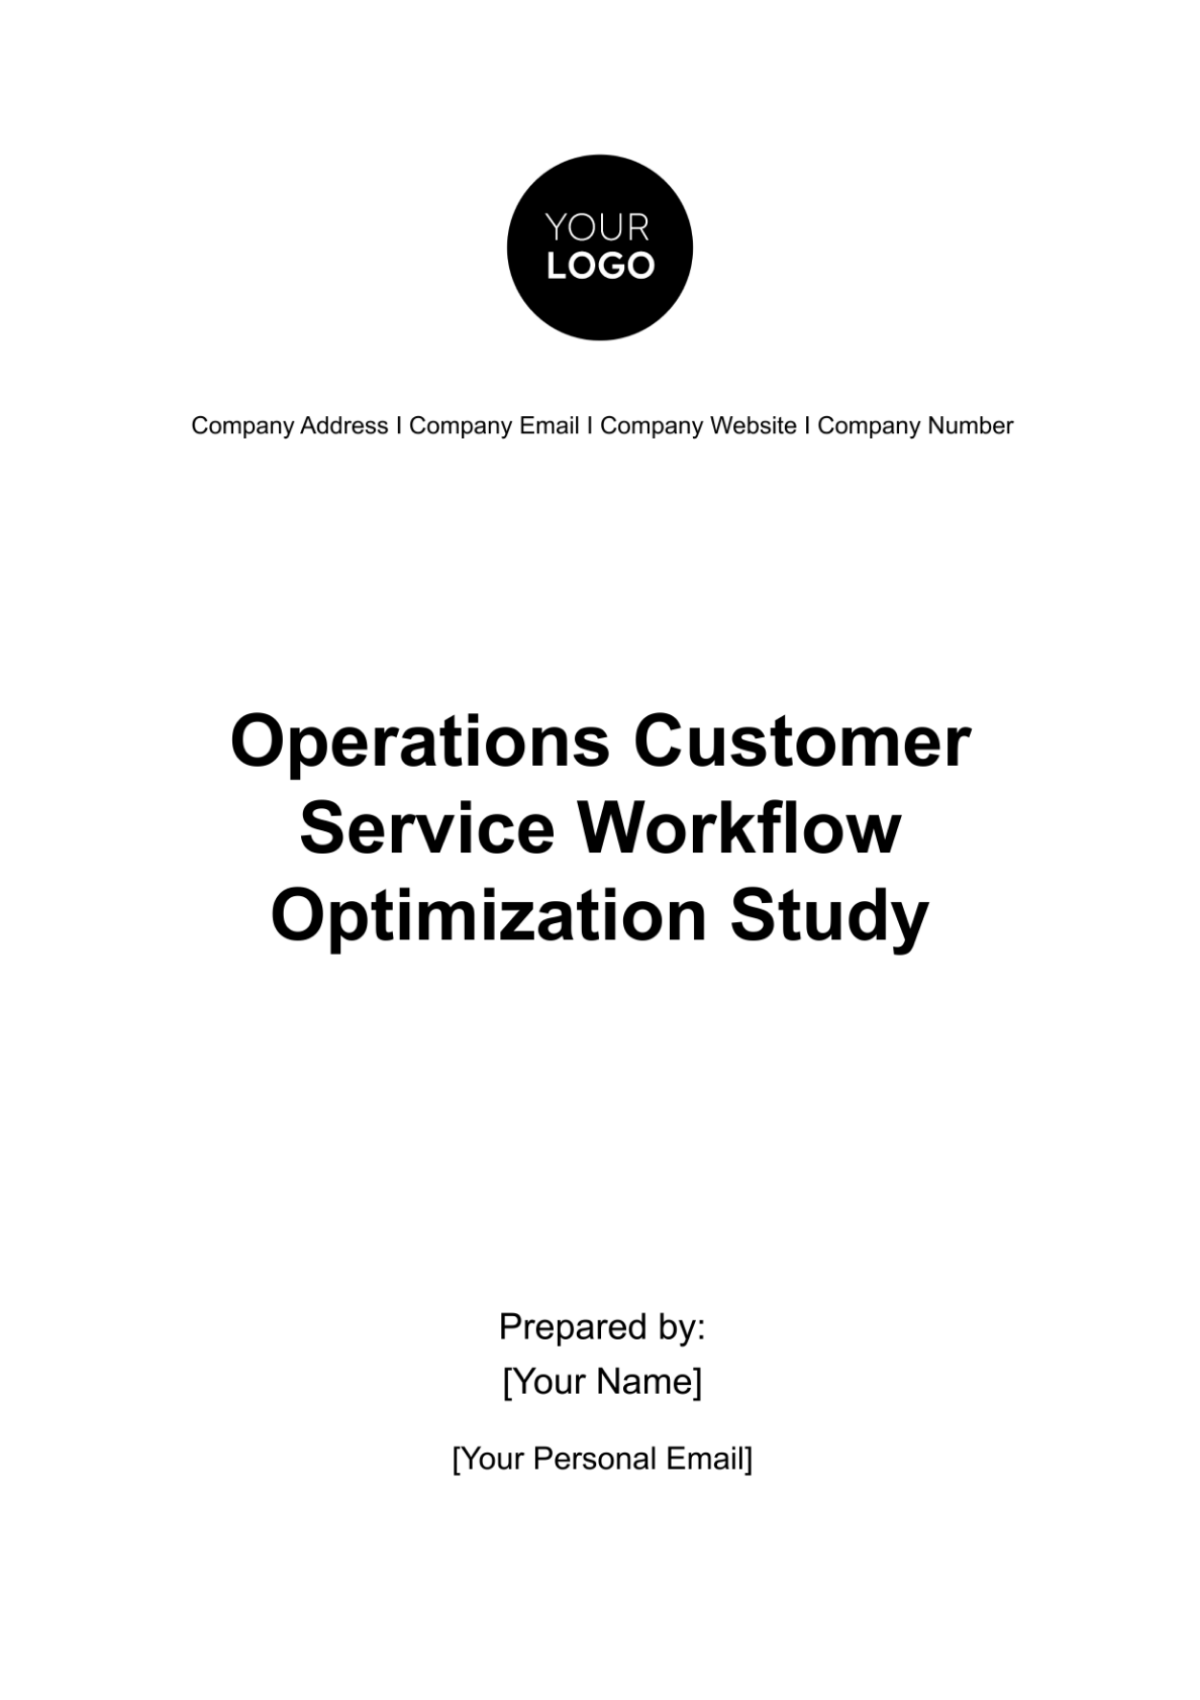 Operations Customer Service Workflow Optimization Study Template